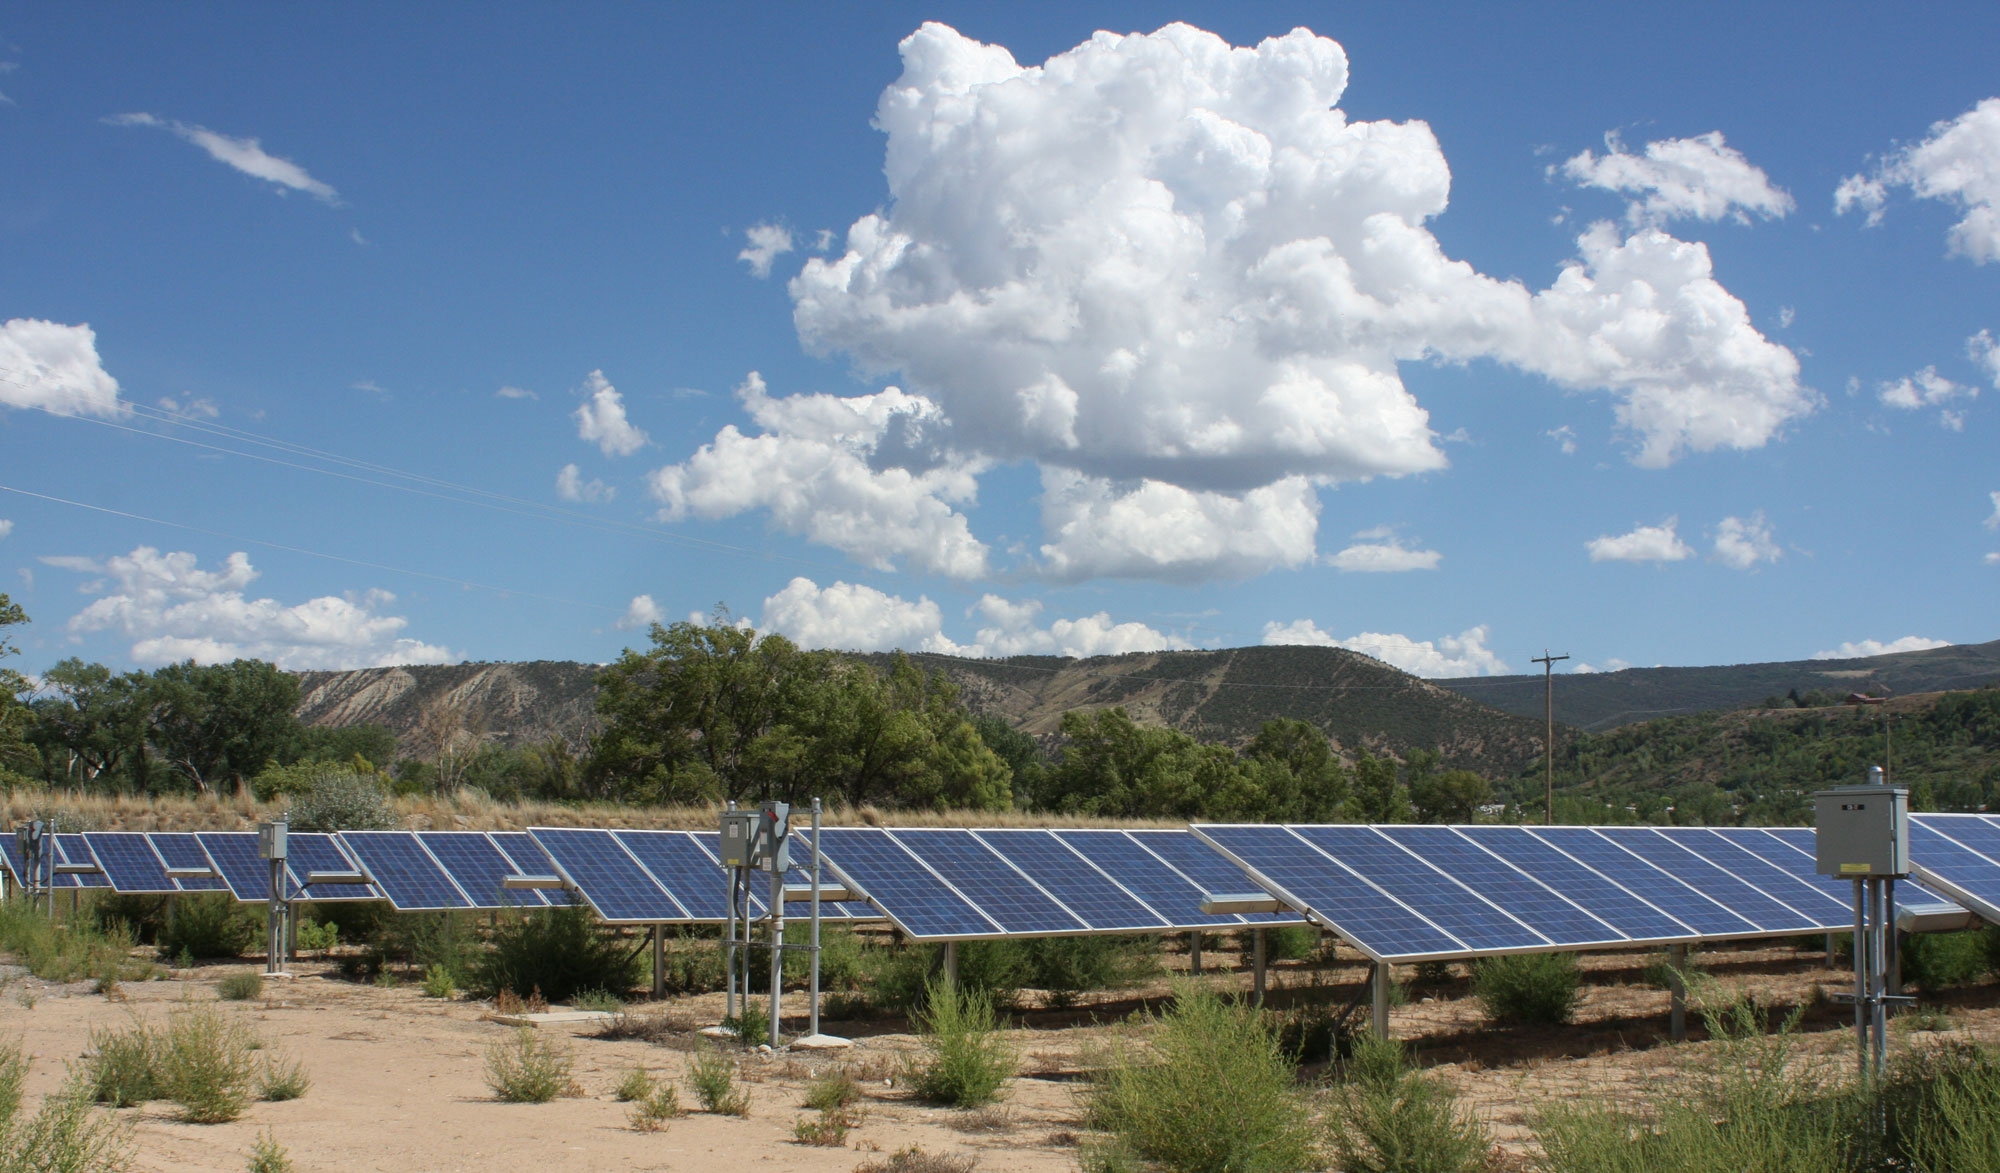 Photograph of solar panels in Colorado.